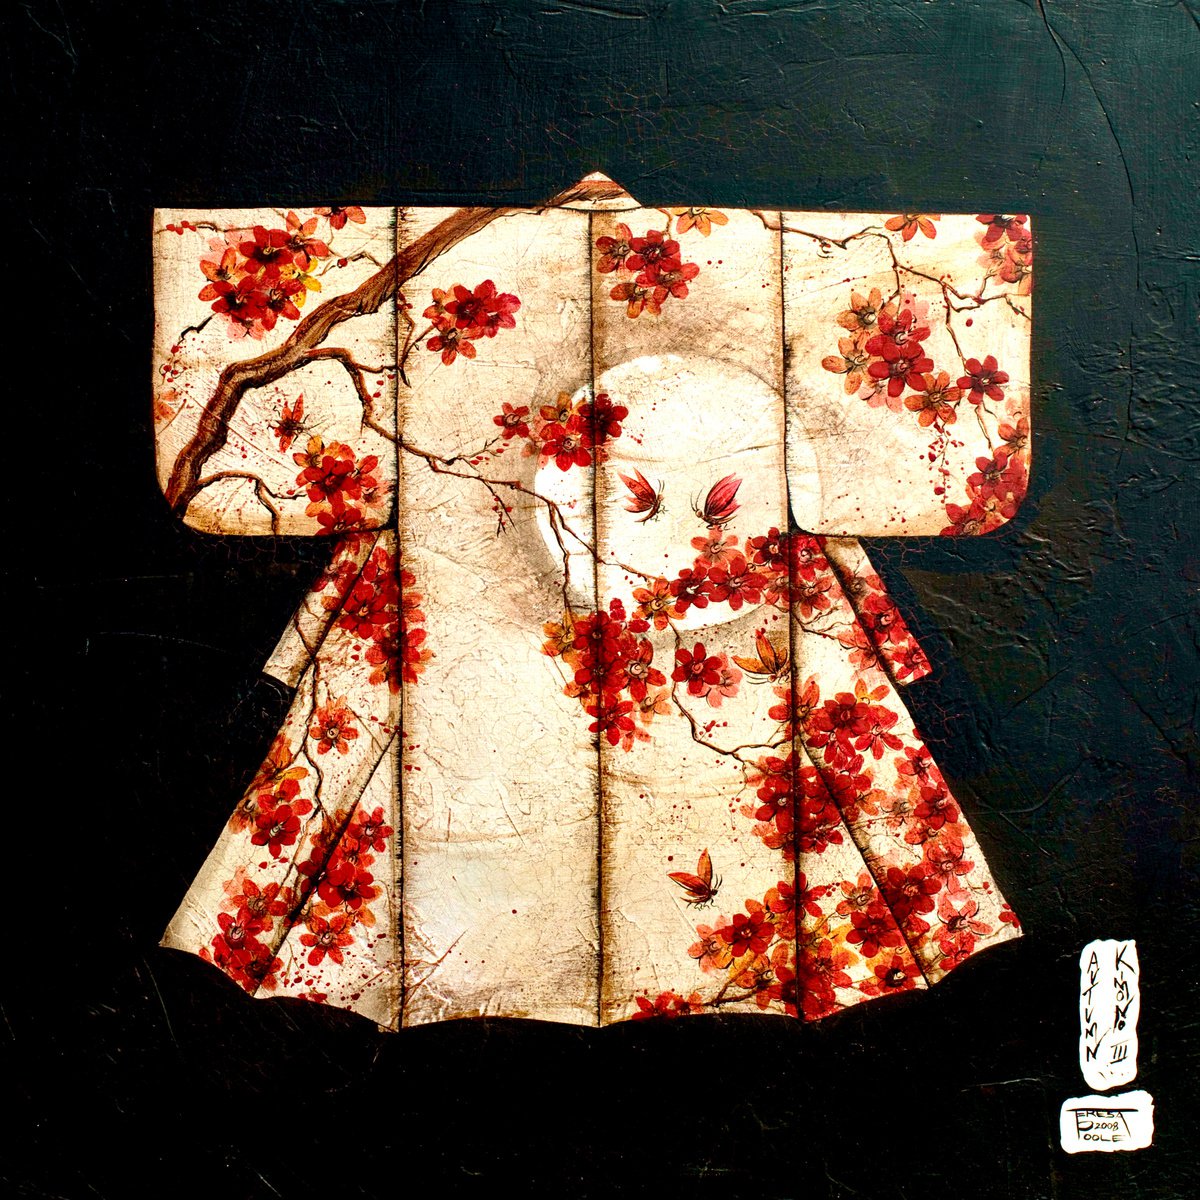 Plum blossom kimono by Teresa Poole